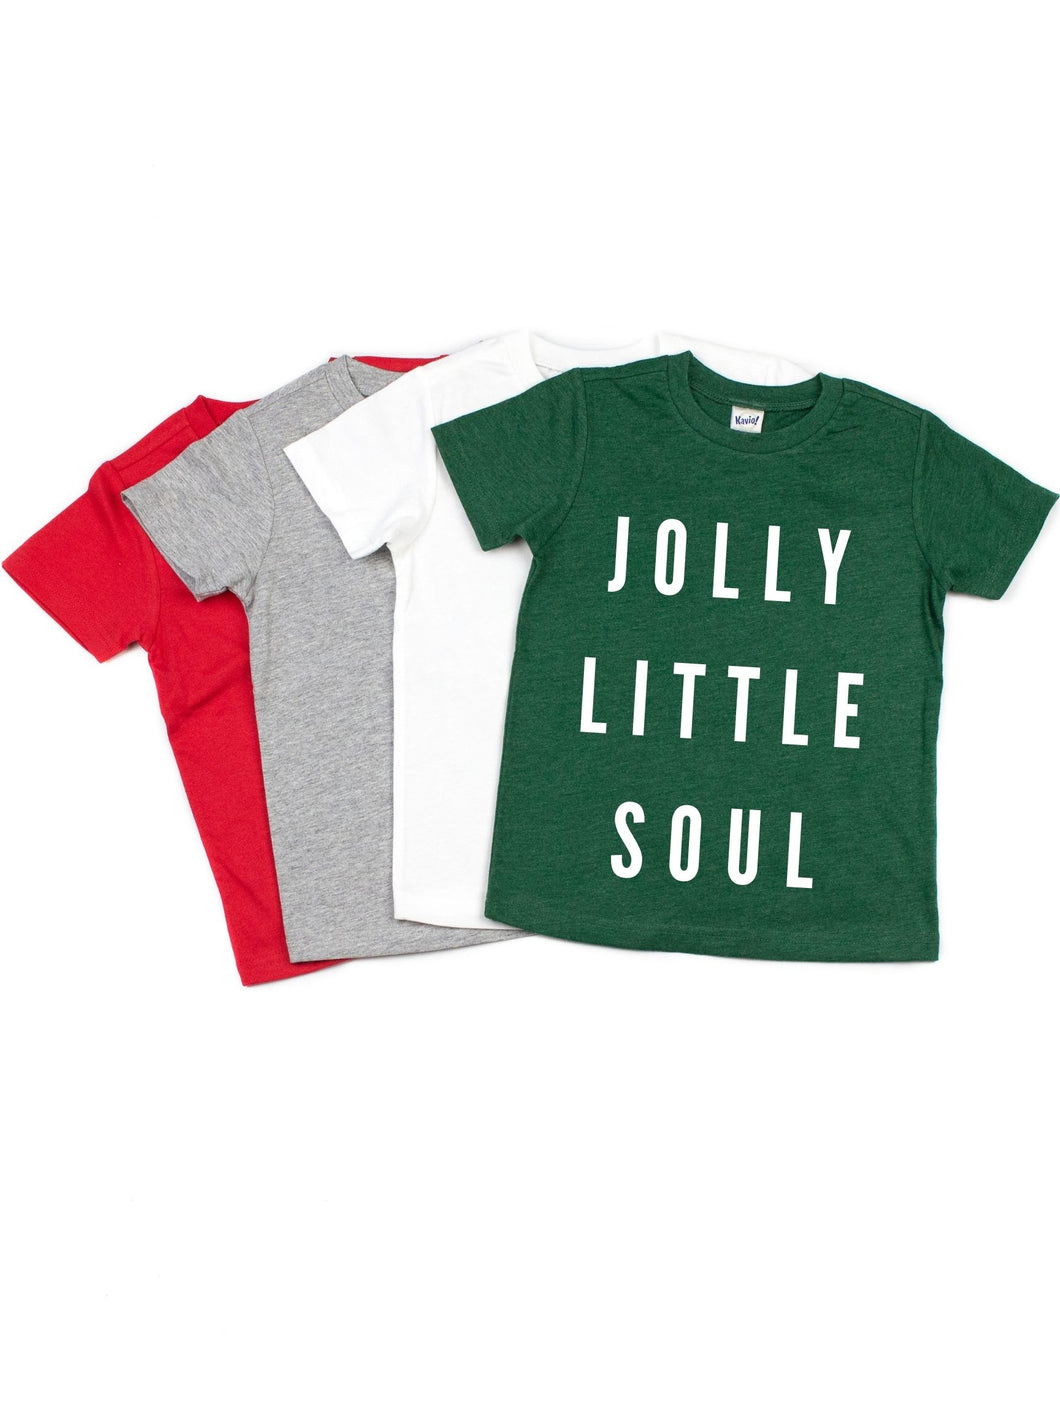 Jolly little soul - Baby/ Toddler / Kids